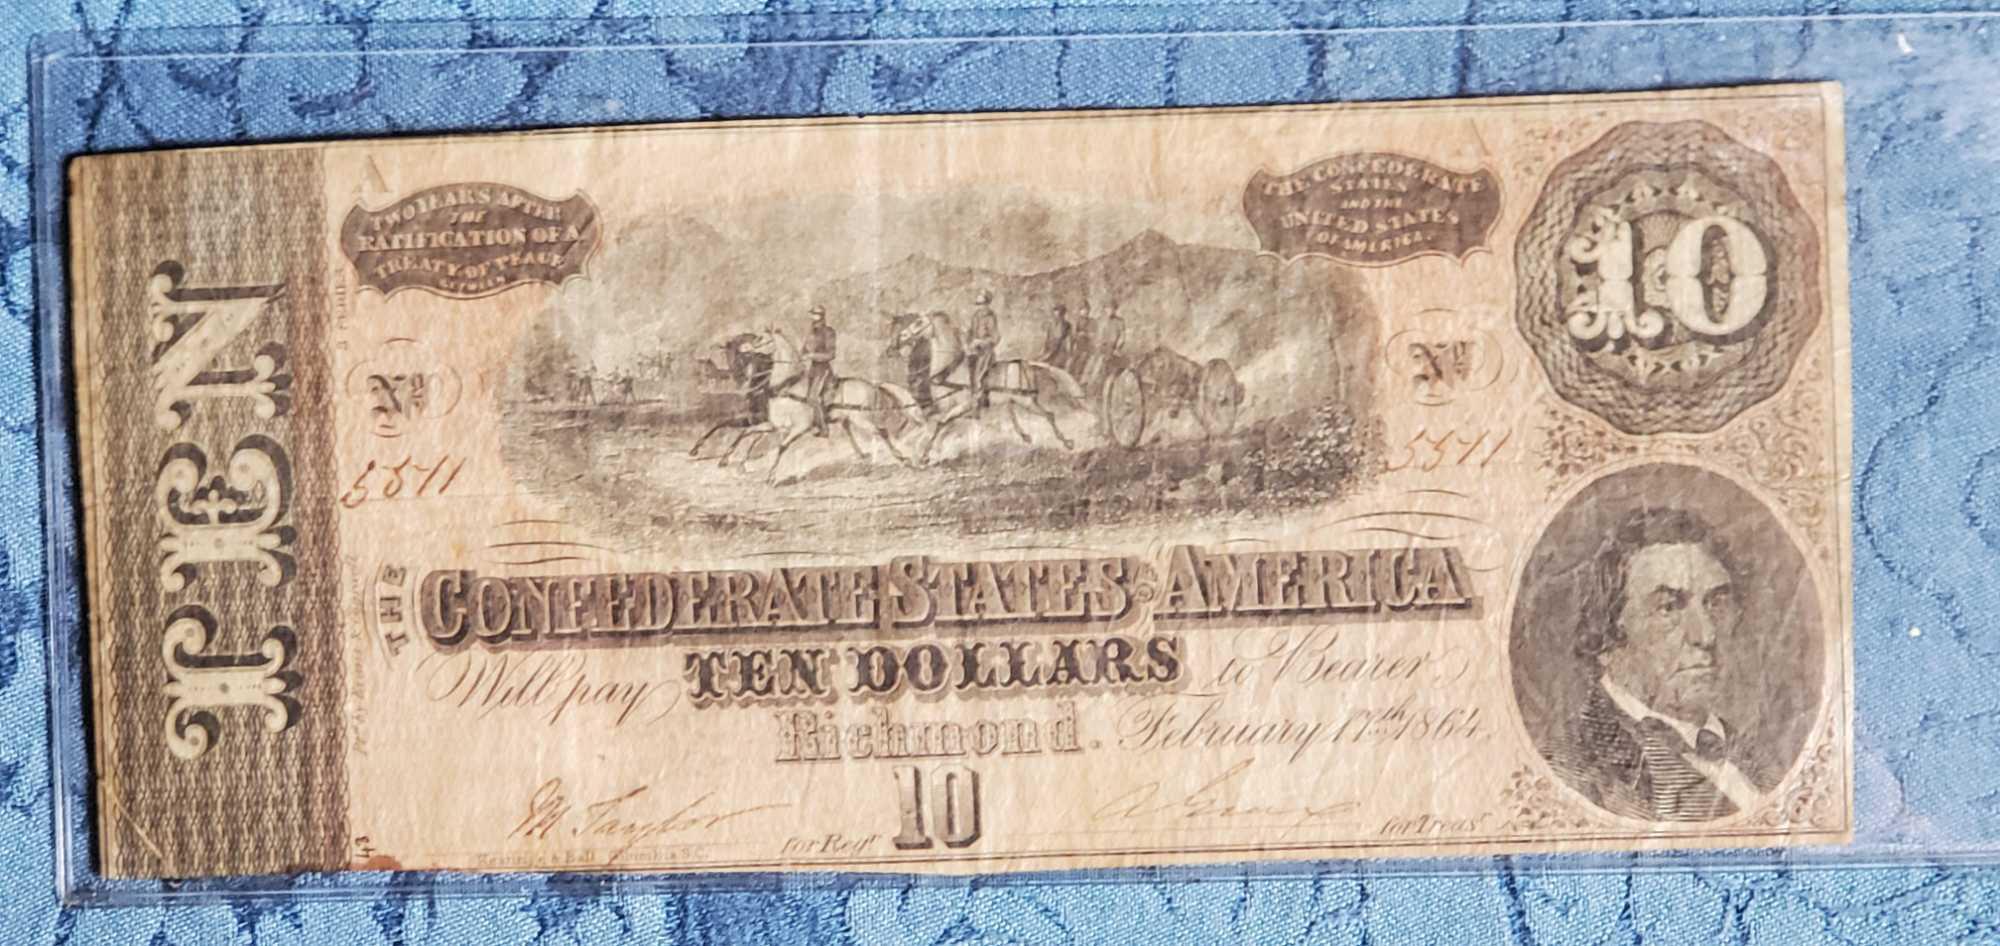 4 1864 $10 Confederate States of America Notes